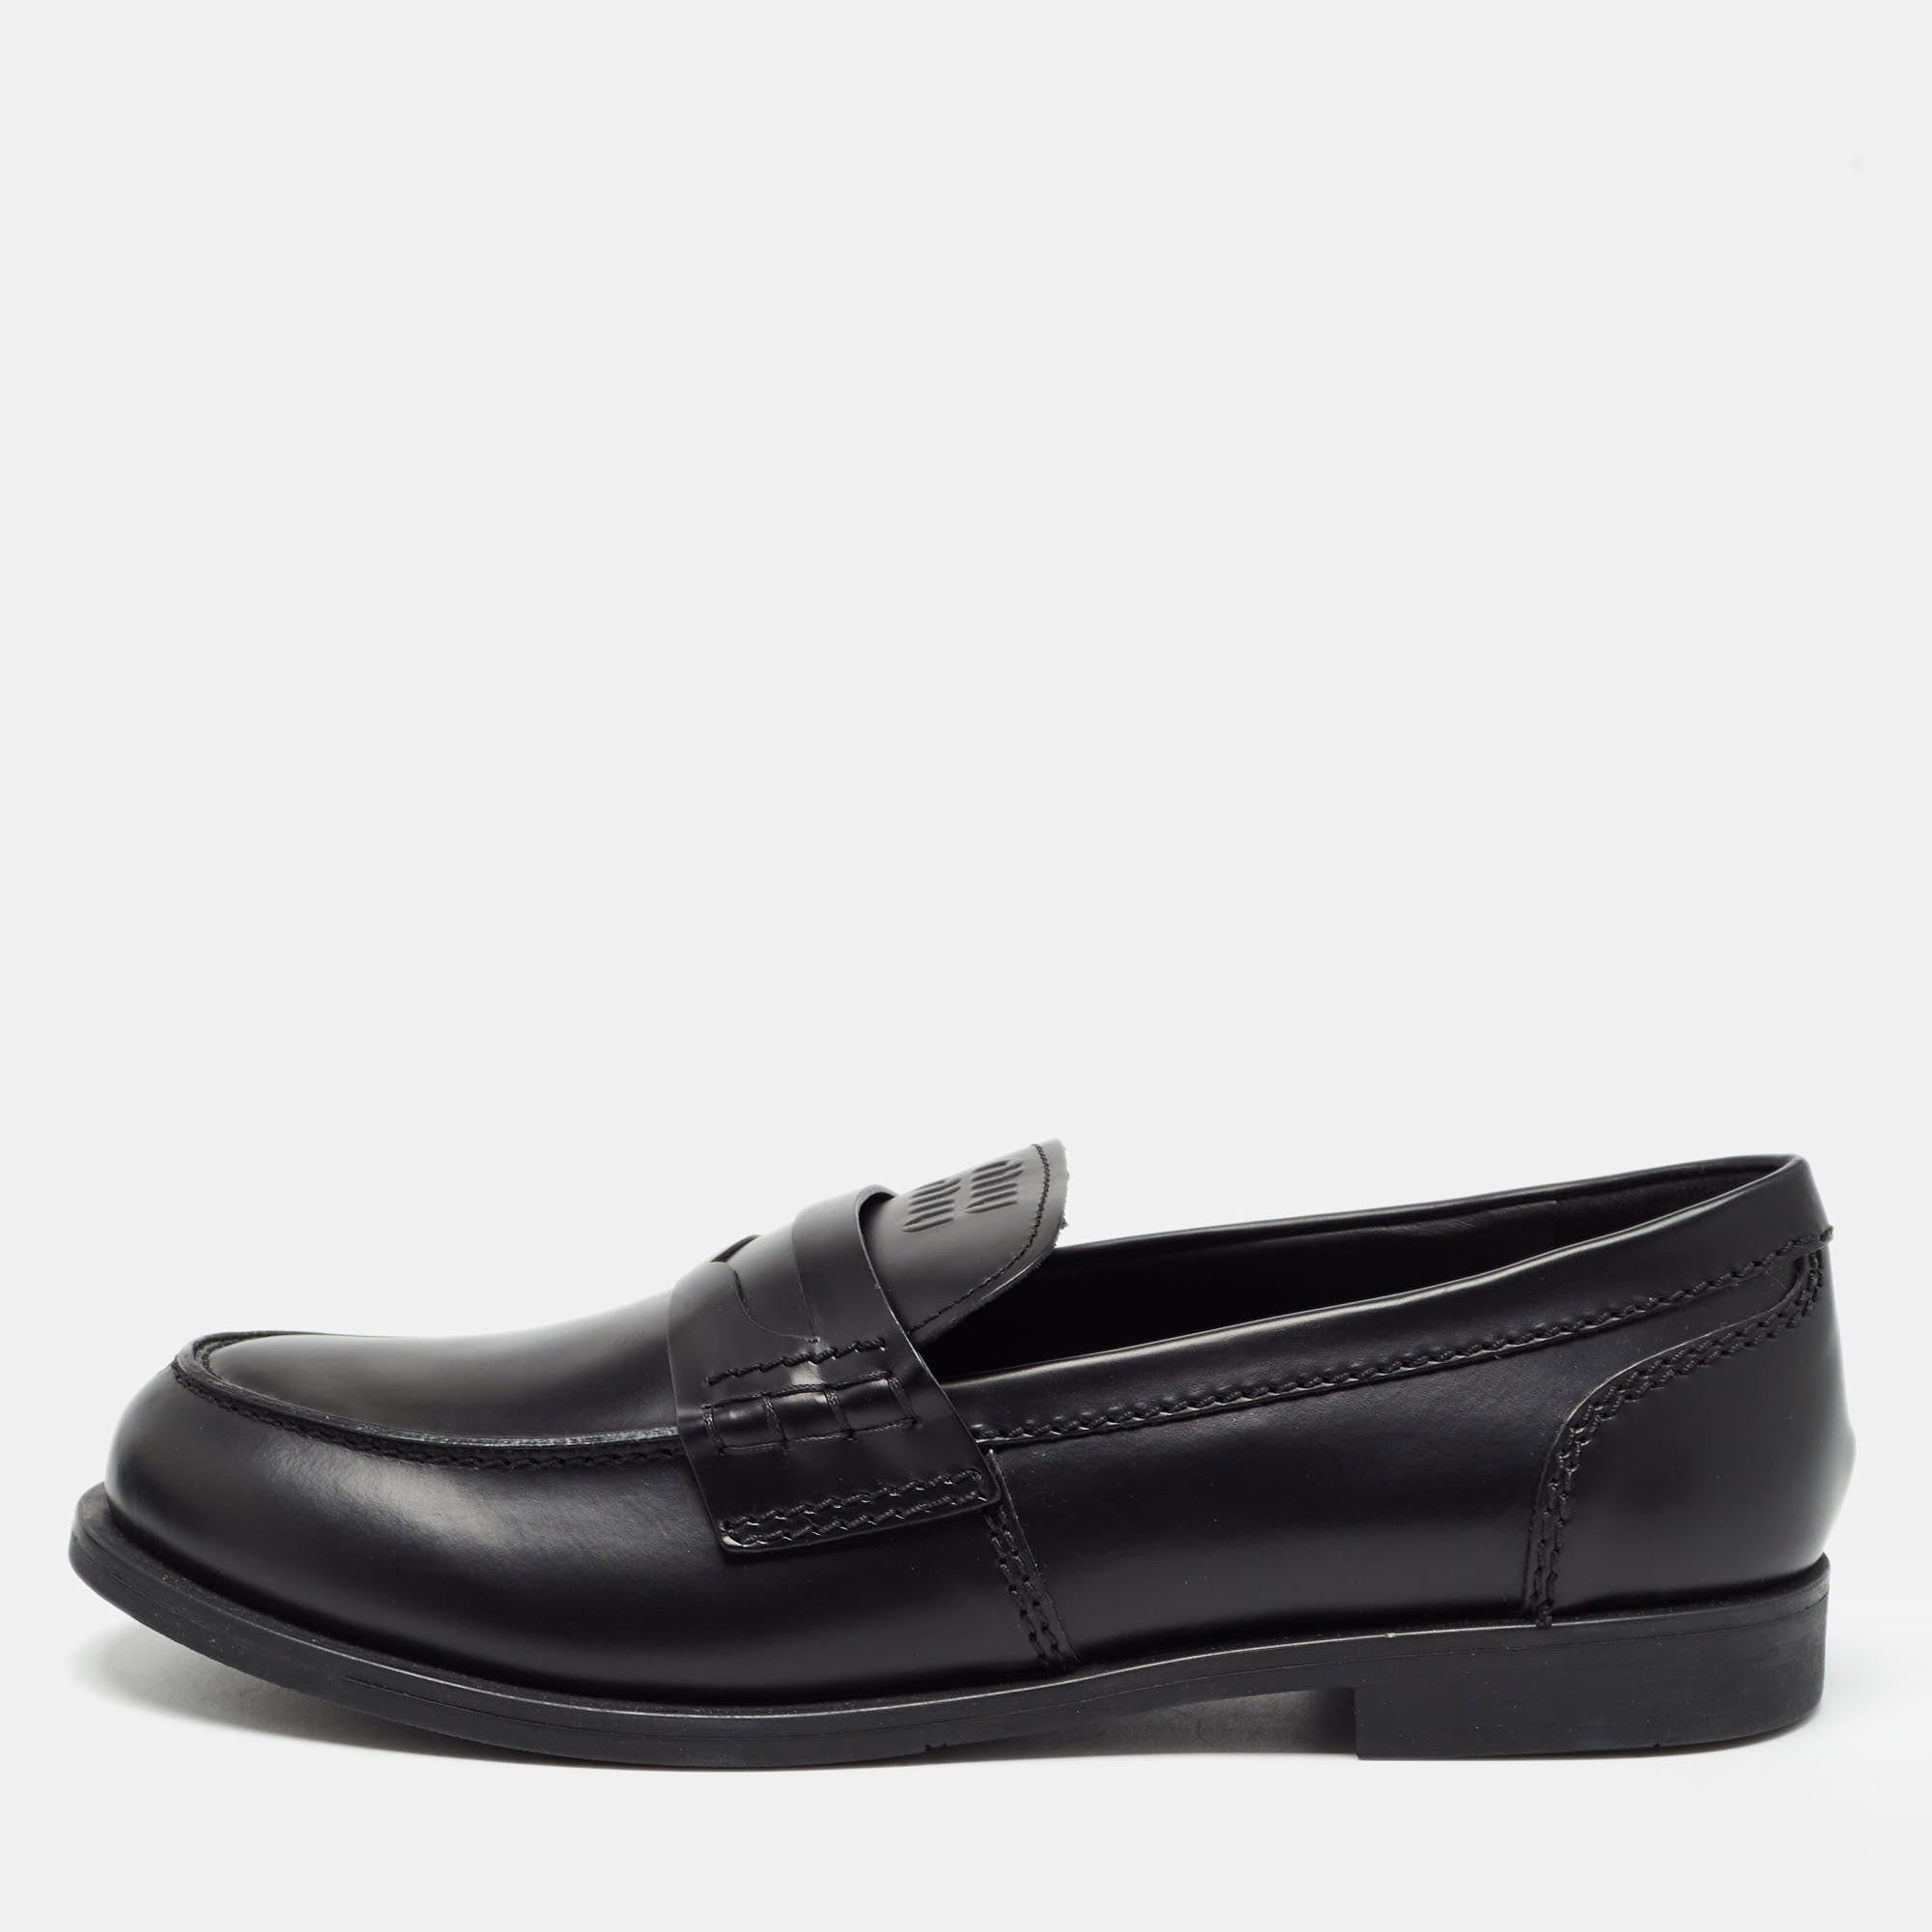 Miu miu black leather slip on loafers size 39.5